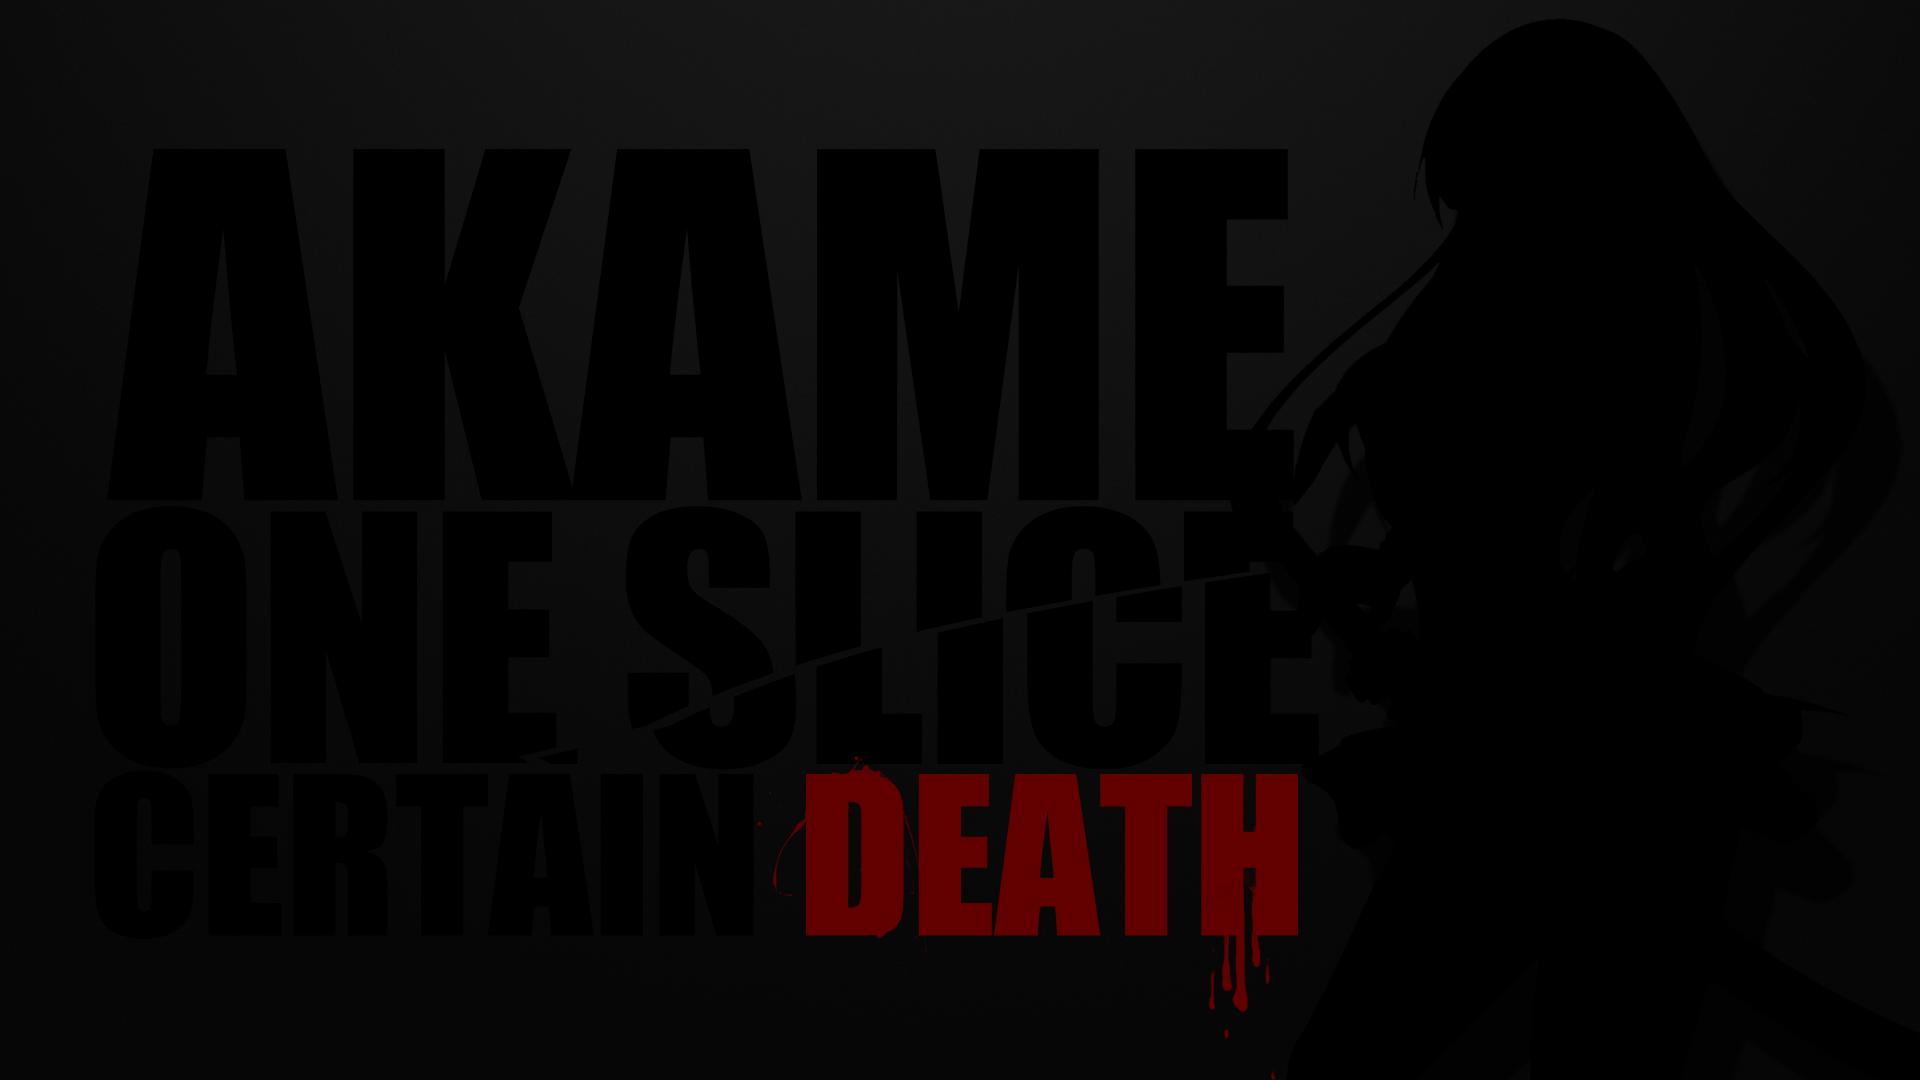 Akame Ga Kill! at 1600 x 1200 size wallpapers HD quality